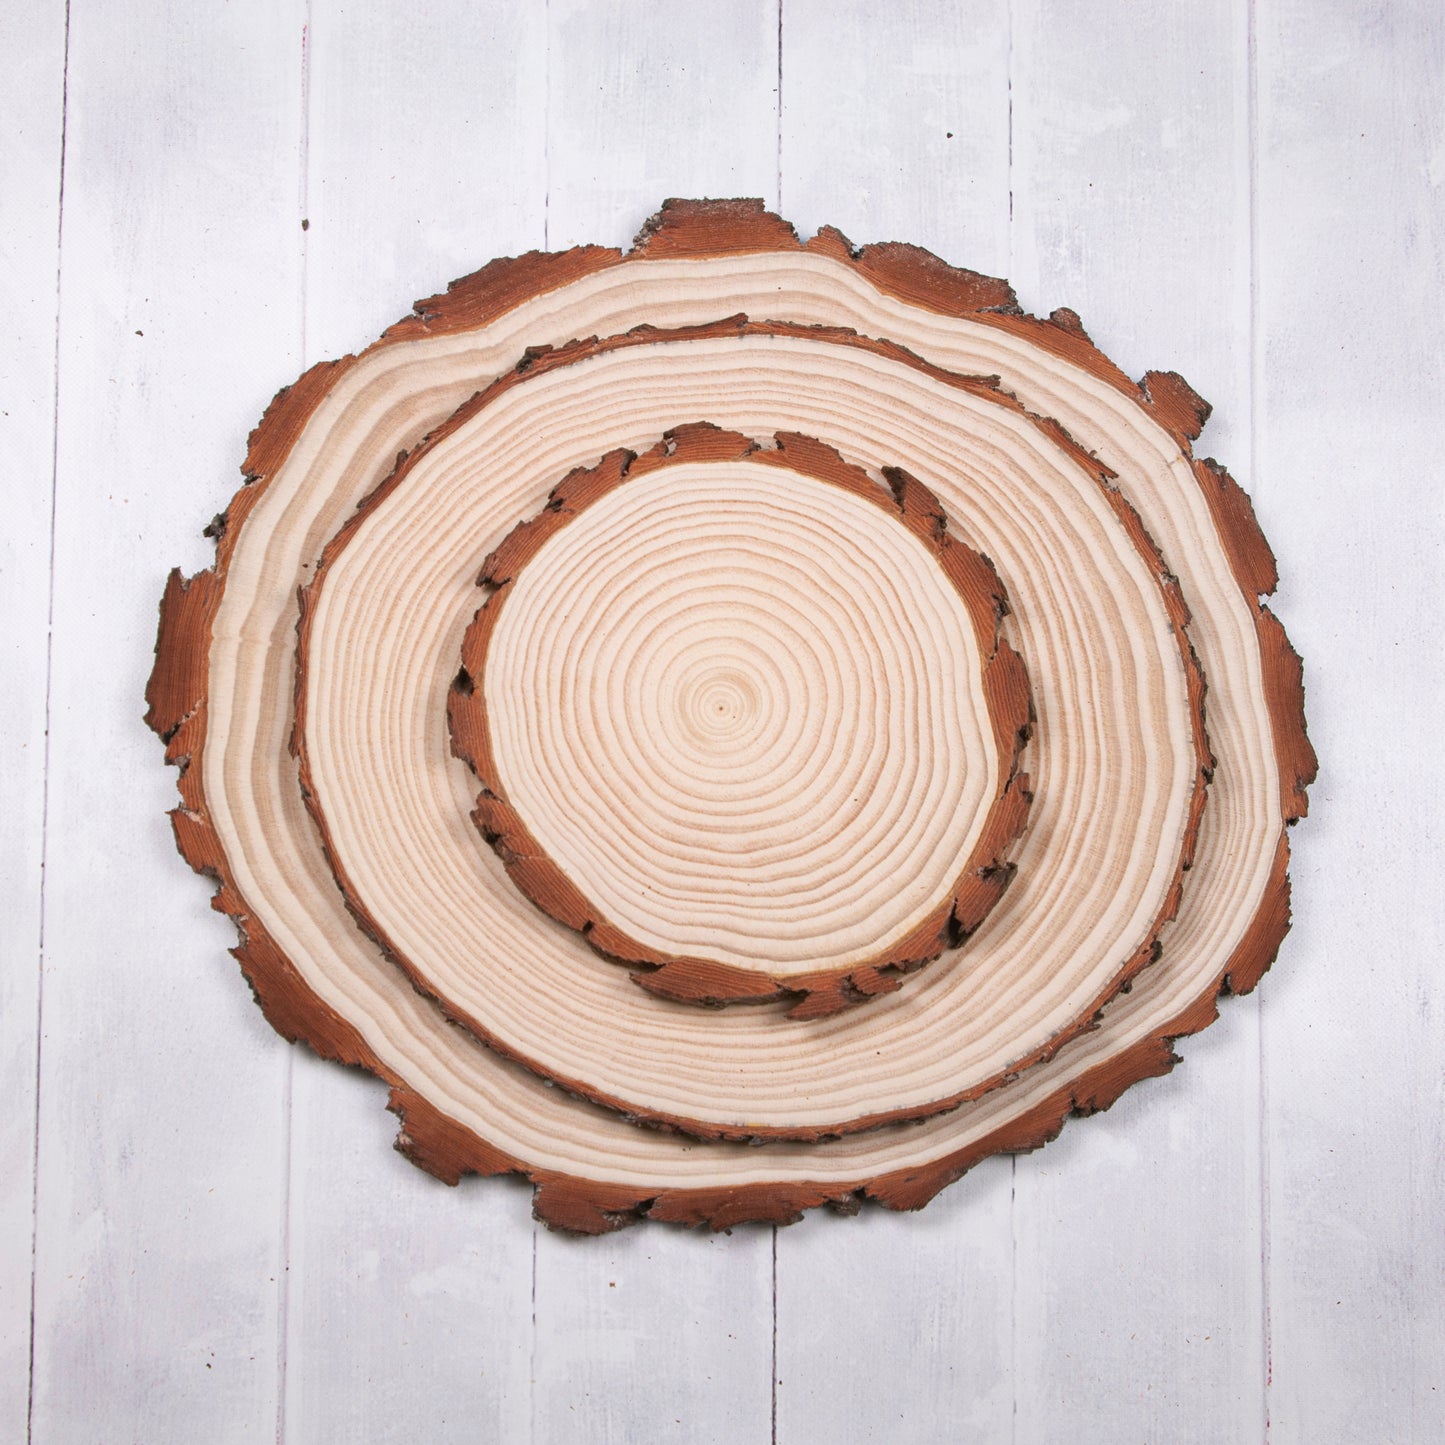 Pine Wood Slices - Sanded one side